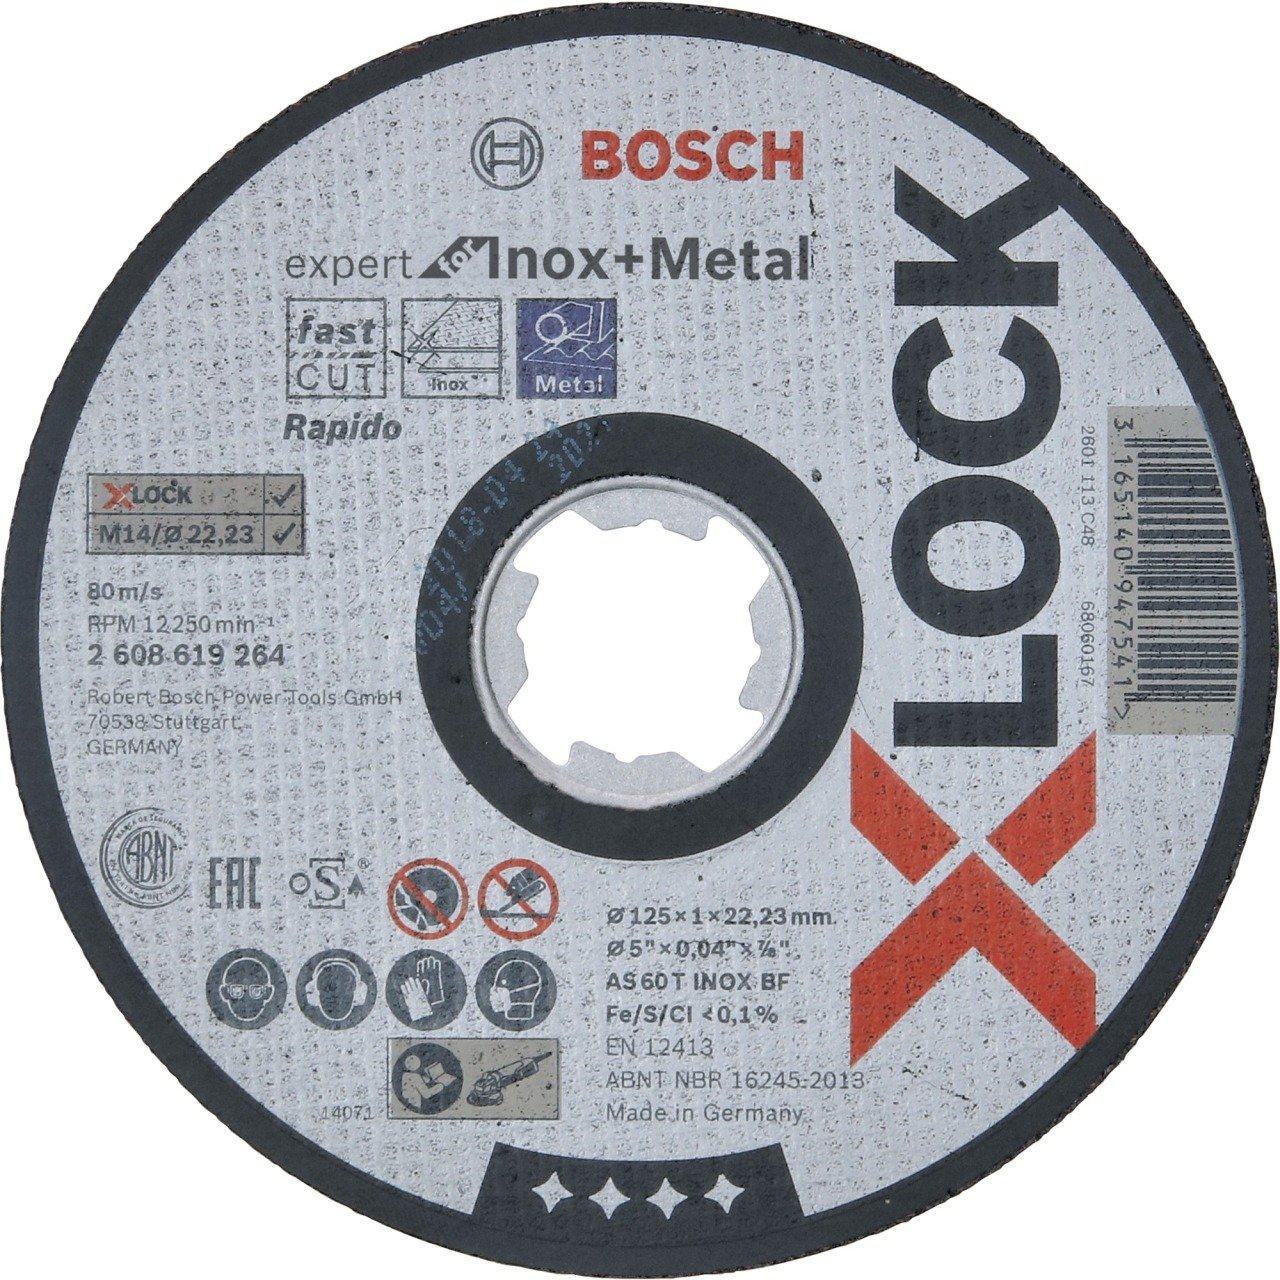 Bosch X-Lock 115 mm Expert Inox Rapipdo